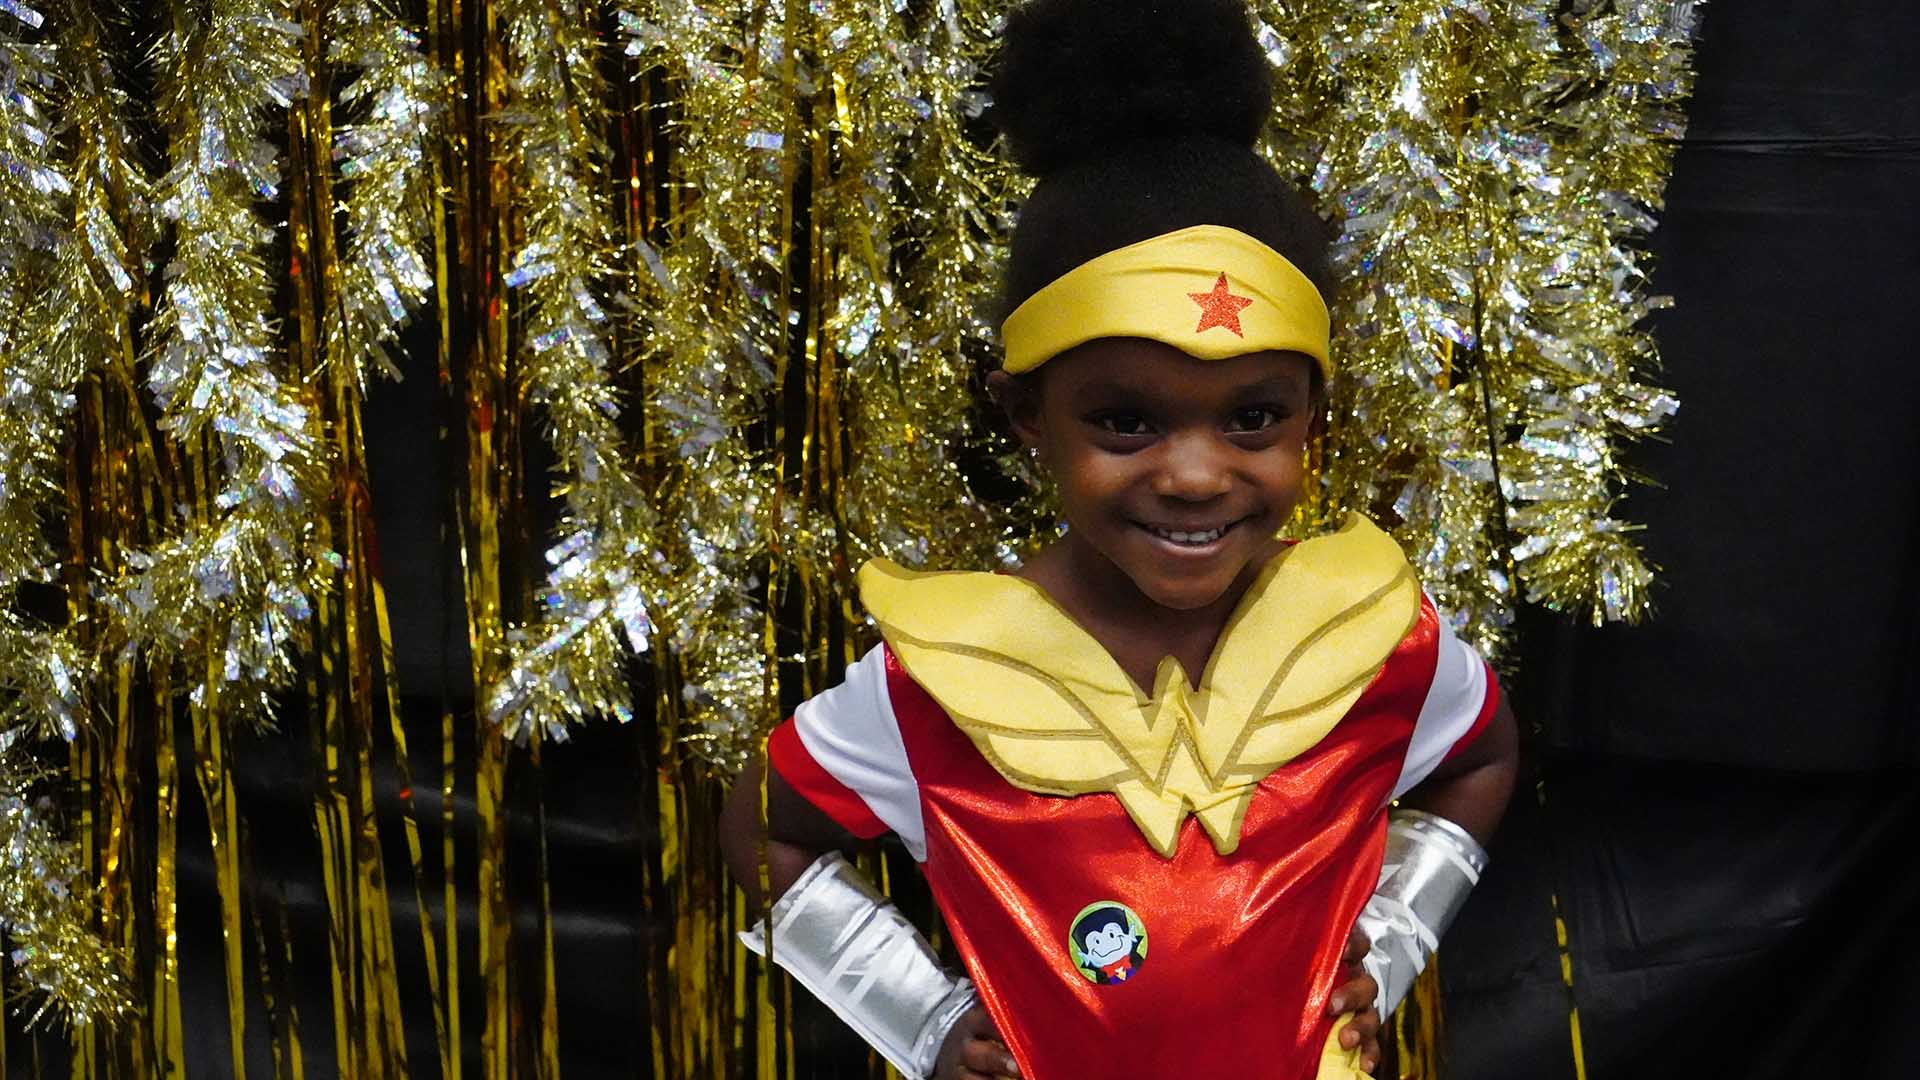 Little girl in wonder woman costume at GWU Octoberfest 2019